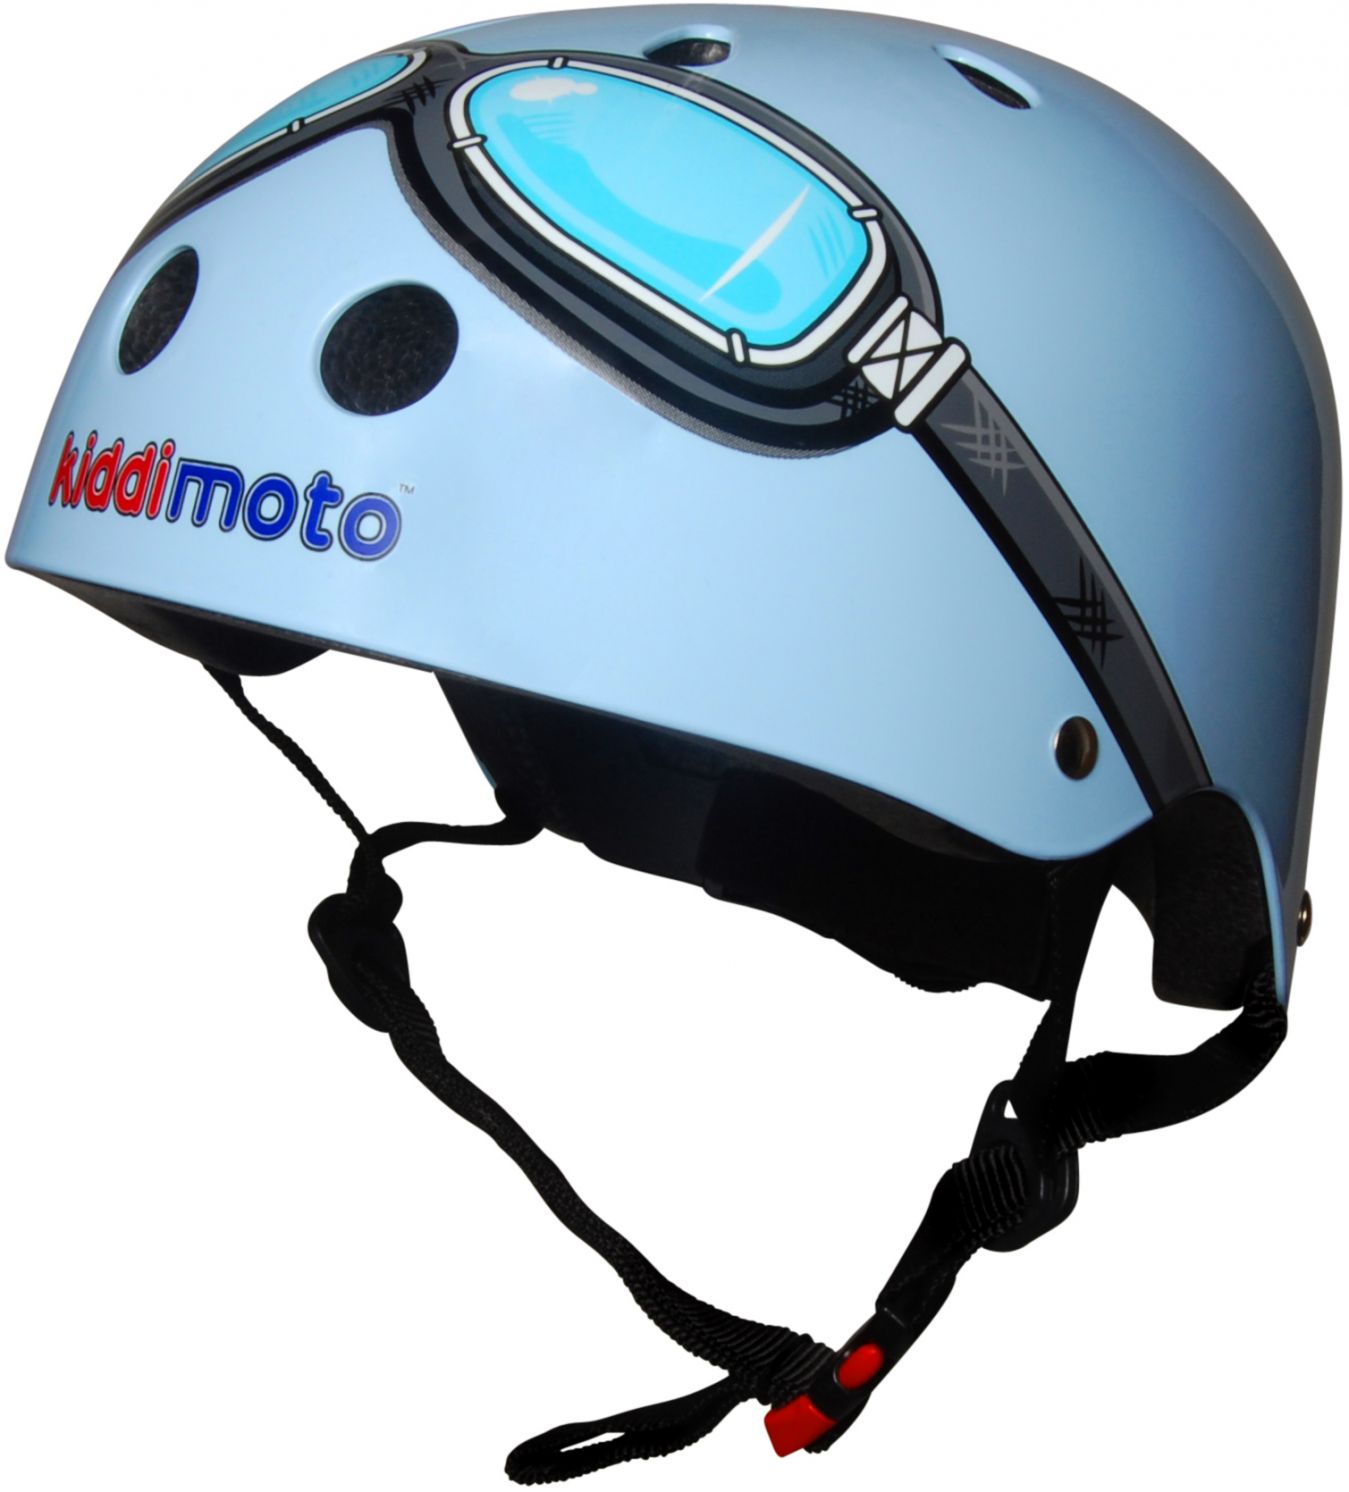 Шлем детский Kiddimoto очки пилота, синий, размер M 53-58см